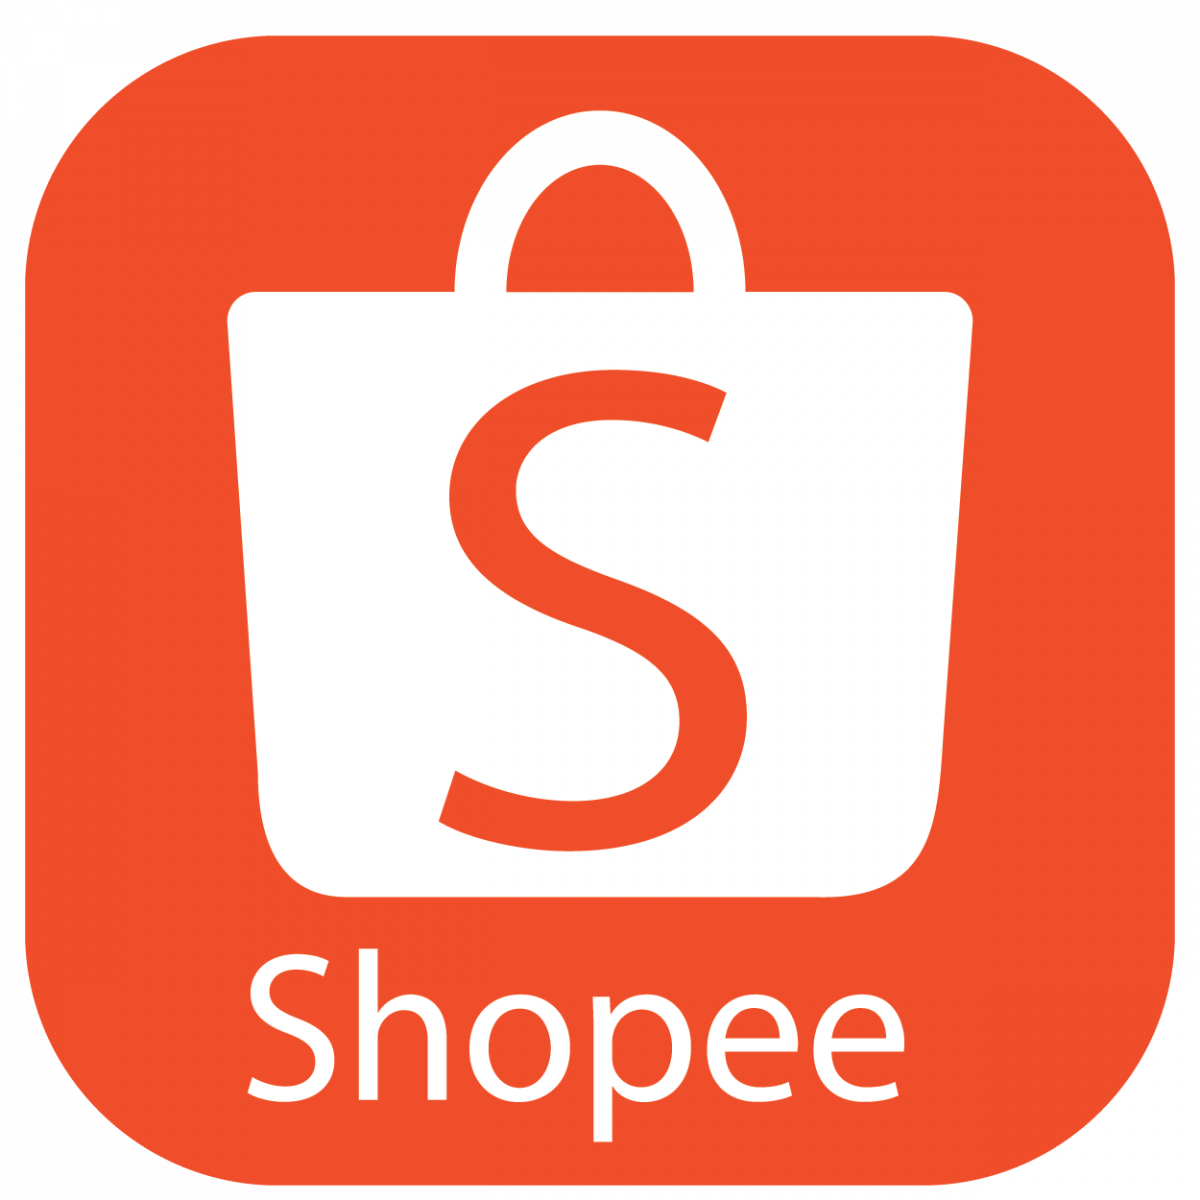 Shoppe